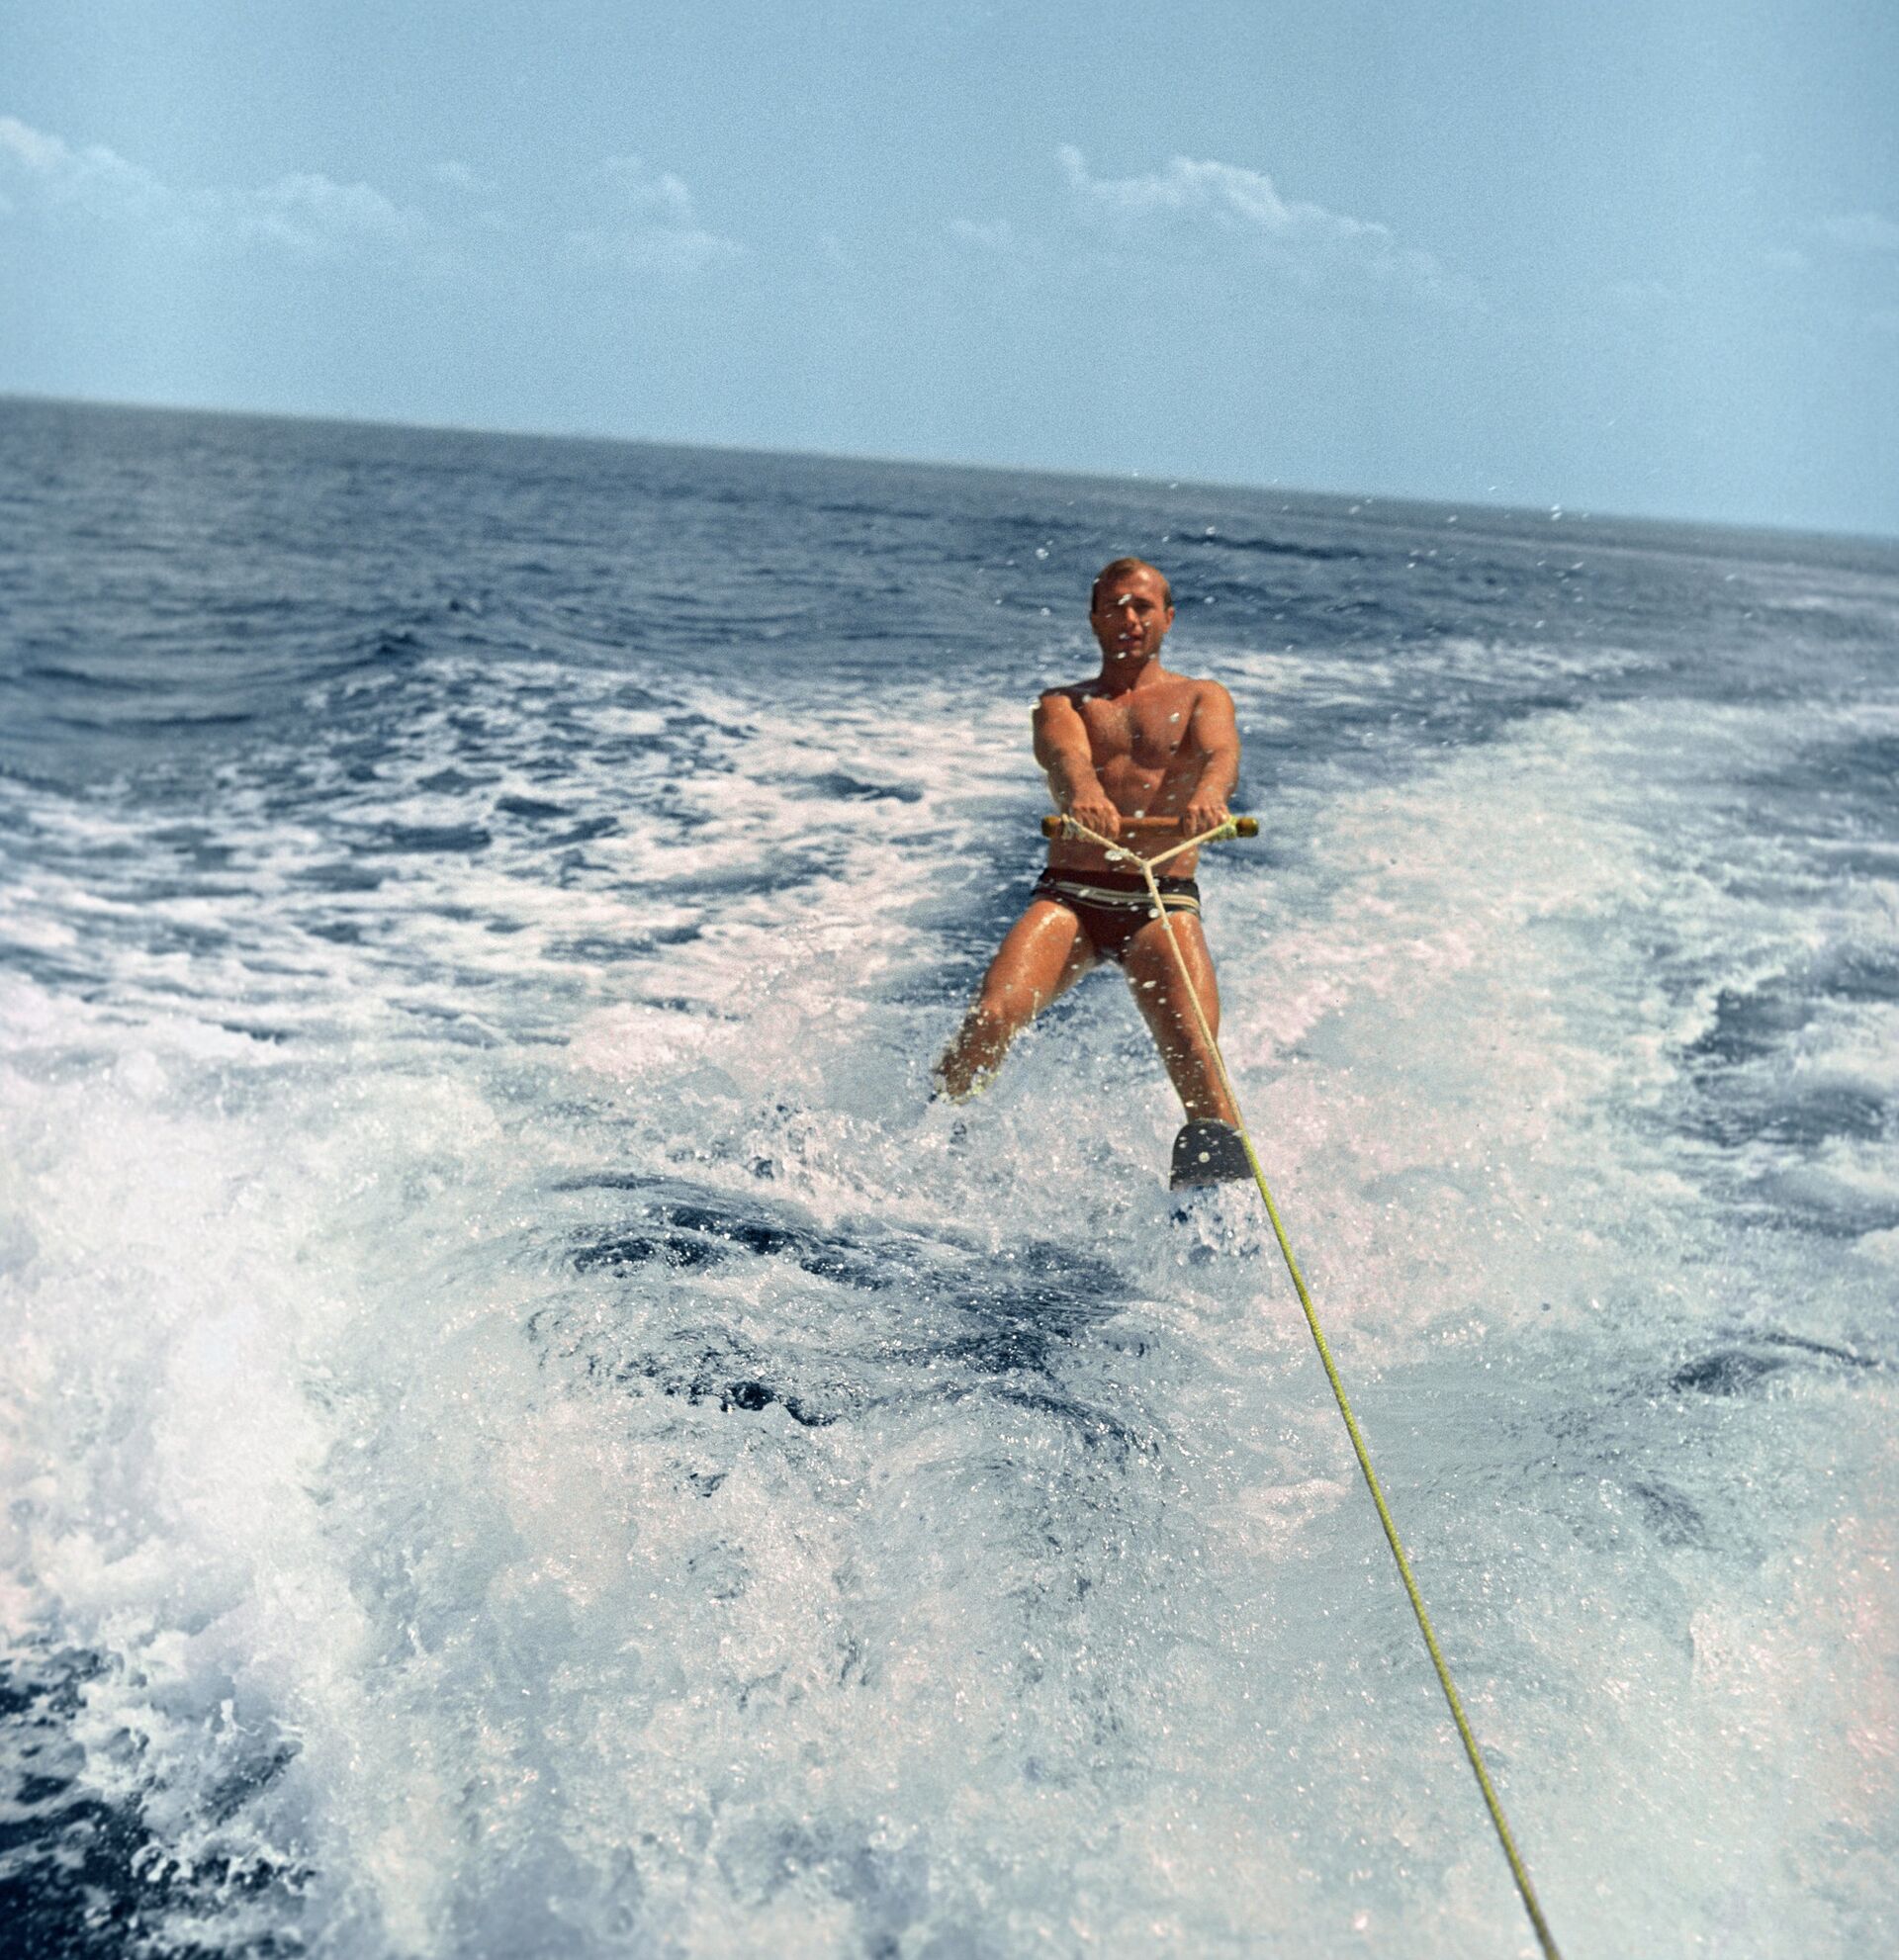 Юрий Гагарин на водных лыжах